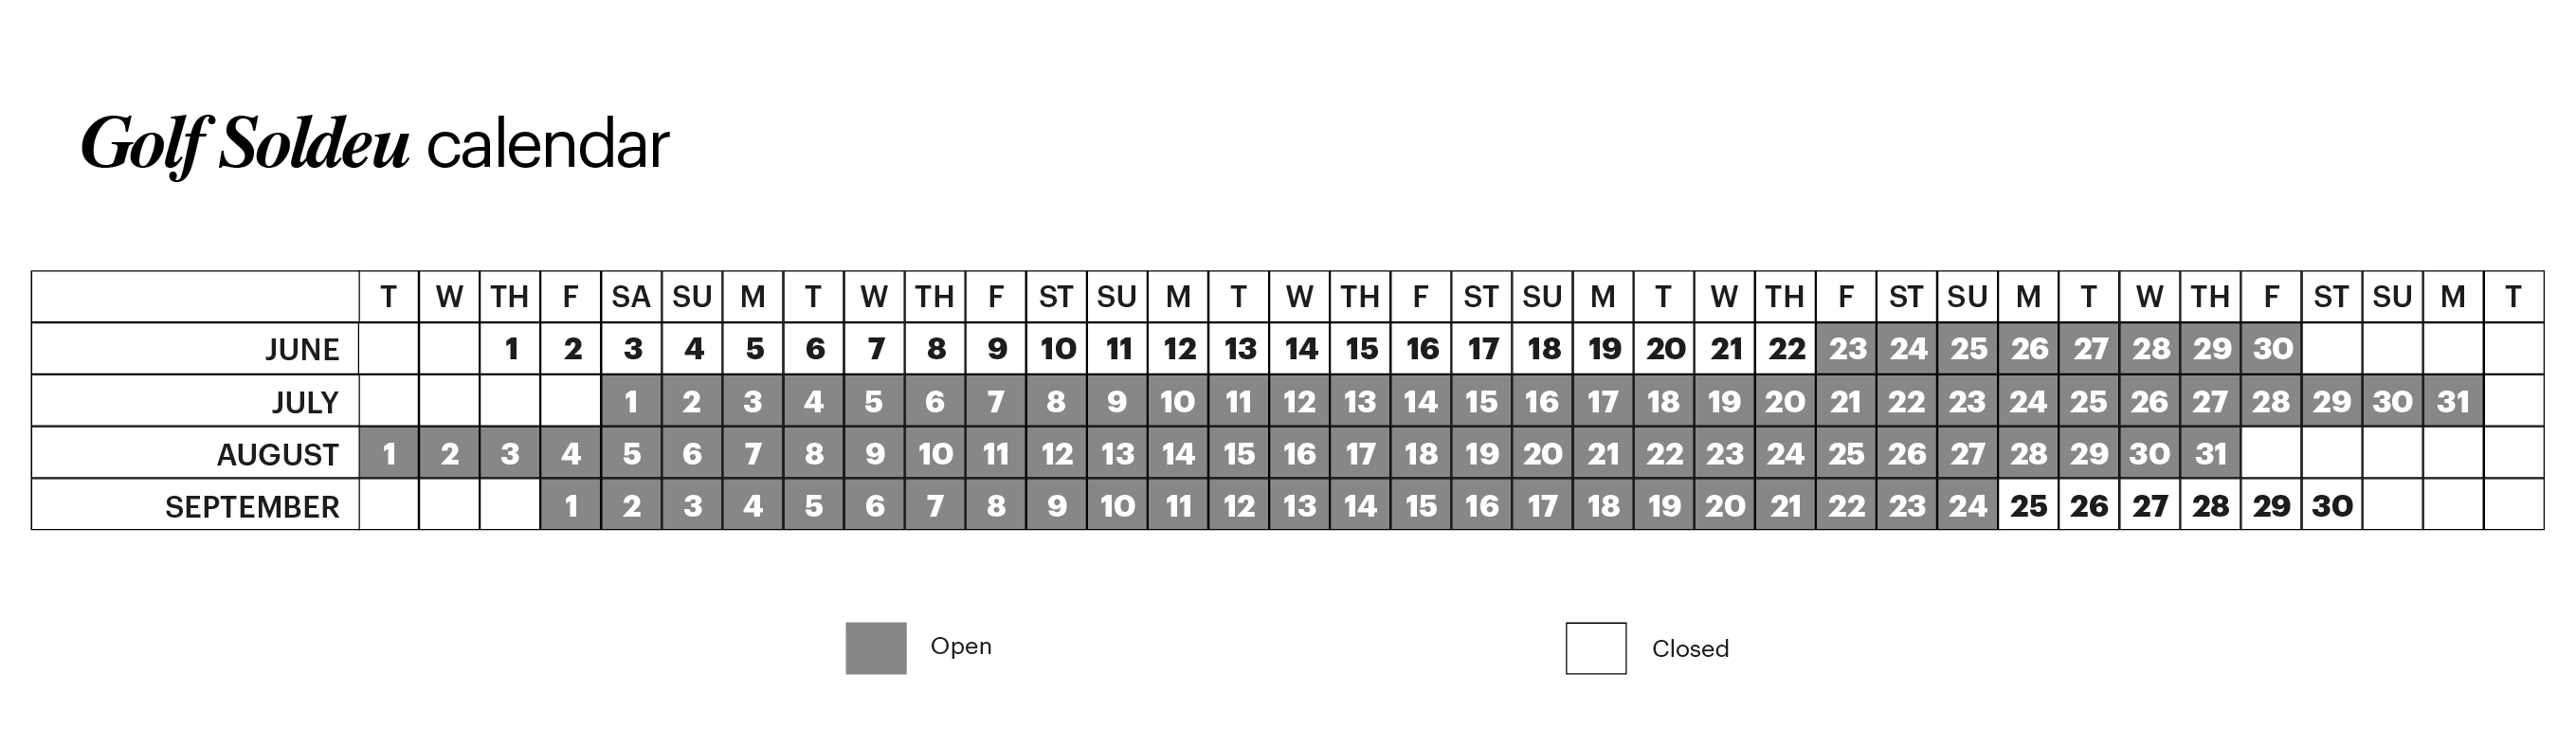 Golf Soldeu season calendar